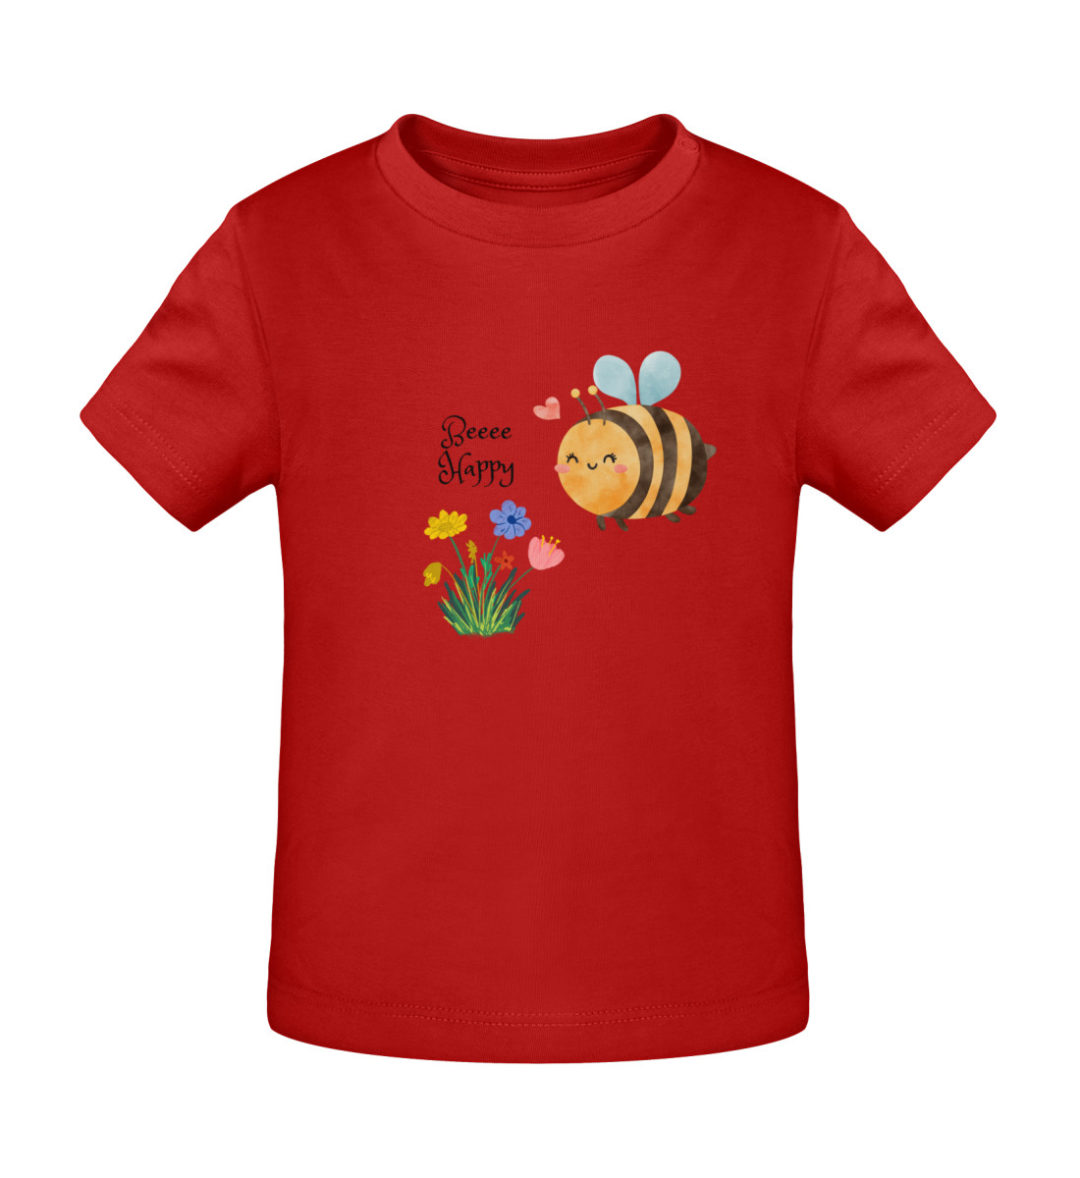 Beee happy - Baby Creator T-Shirt ST/ST-4